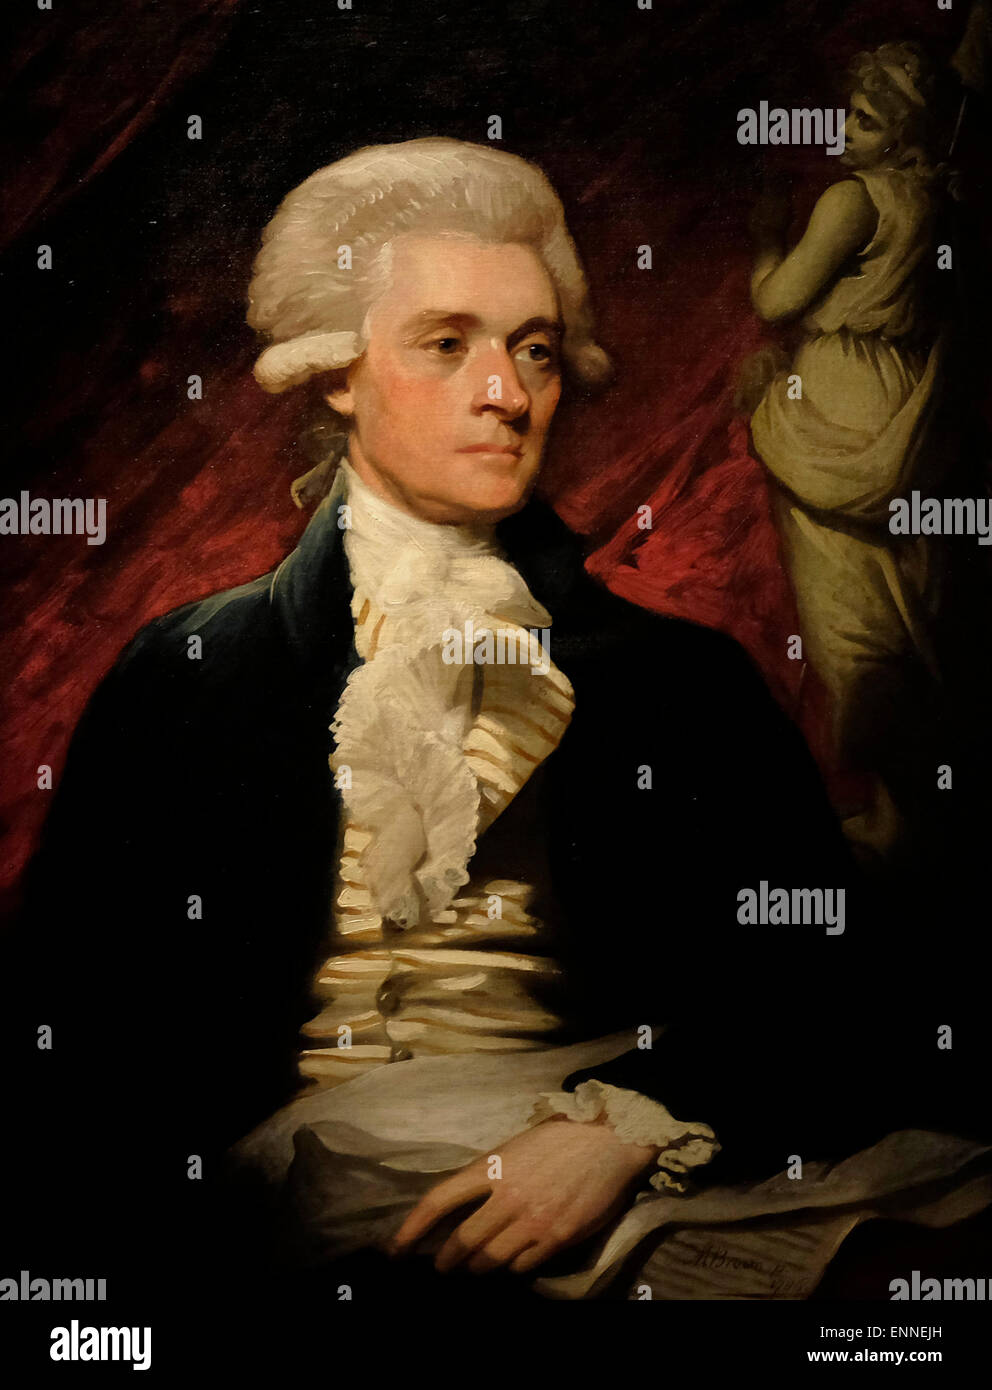 Dream-art Oil painting America President Thomas Jefferson on canvas hand paint 